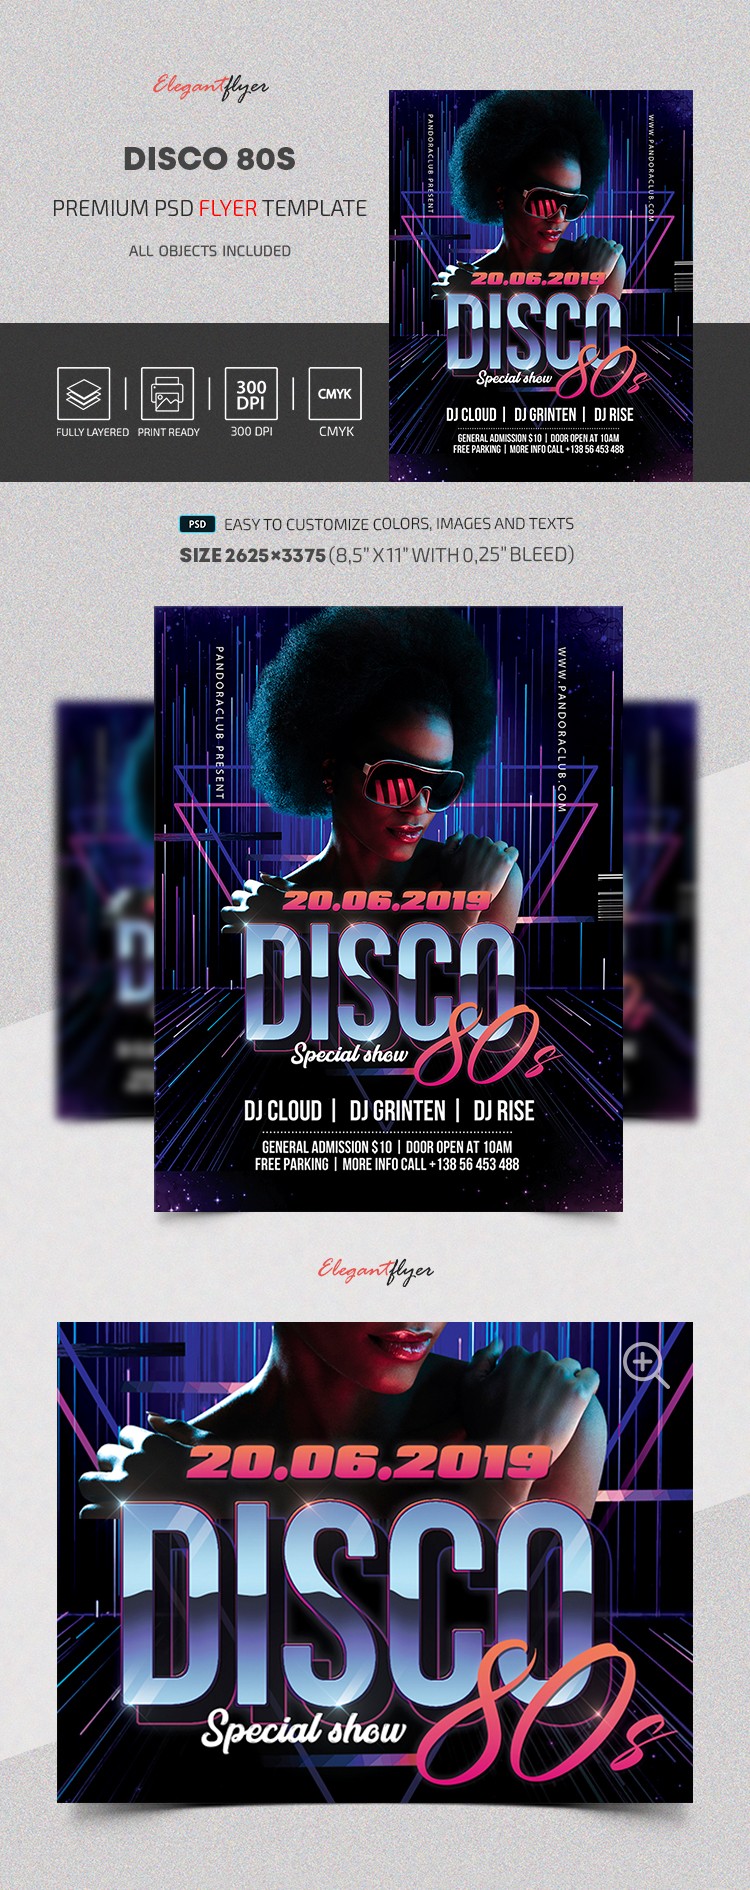 Disco 80s by ElegantFlyer